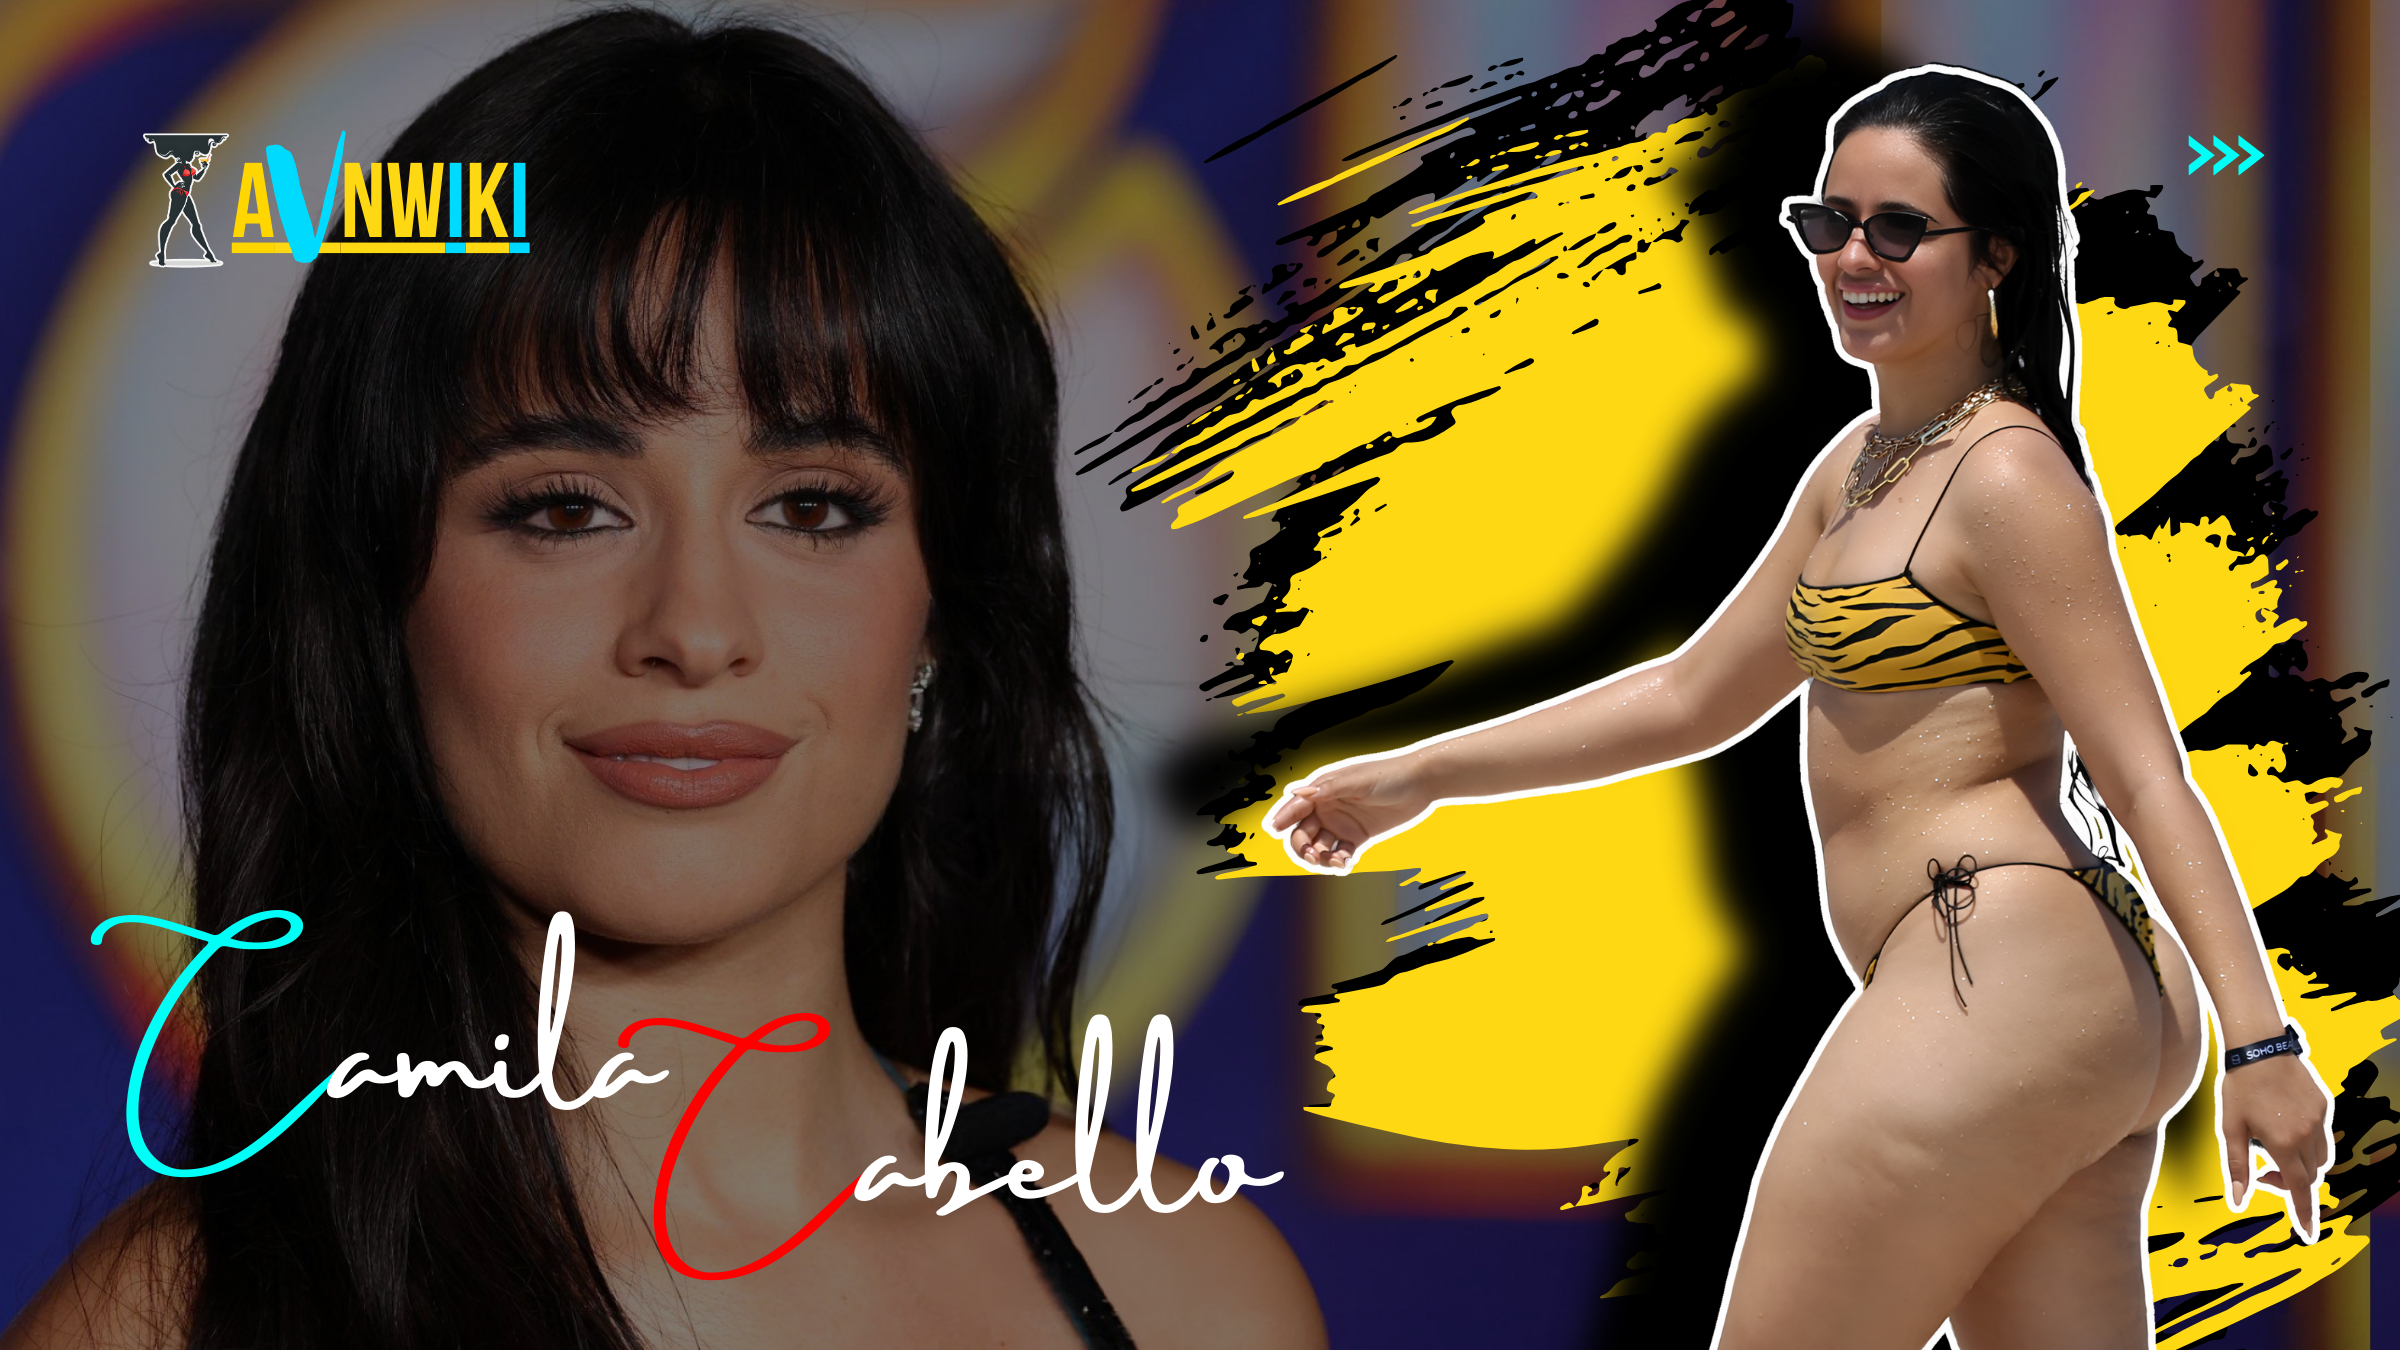 Camila Cabello Biography, Wiki, Age, Height, Boyfriend, Husband, Movies, Pics